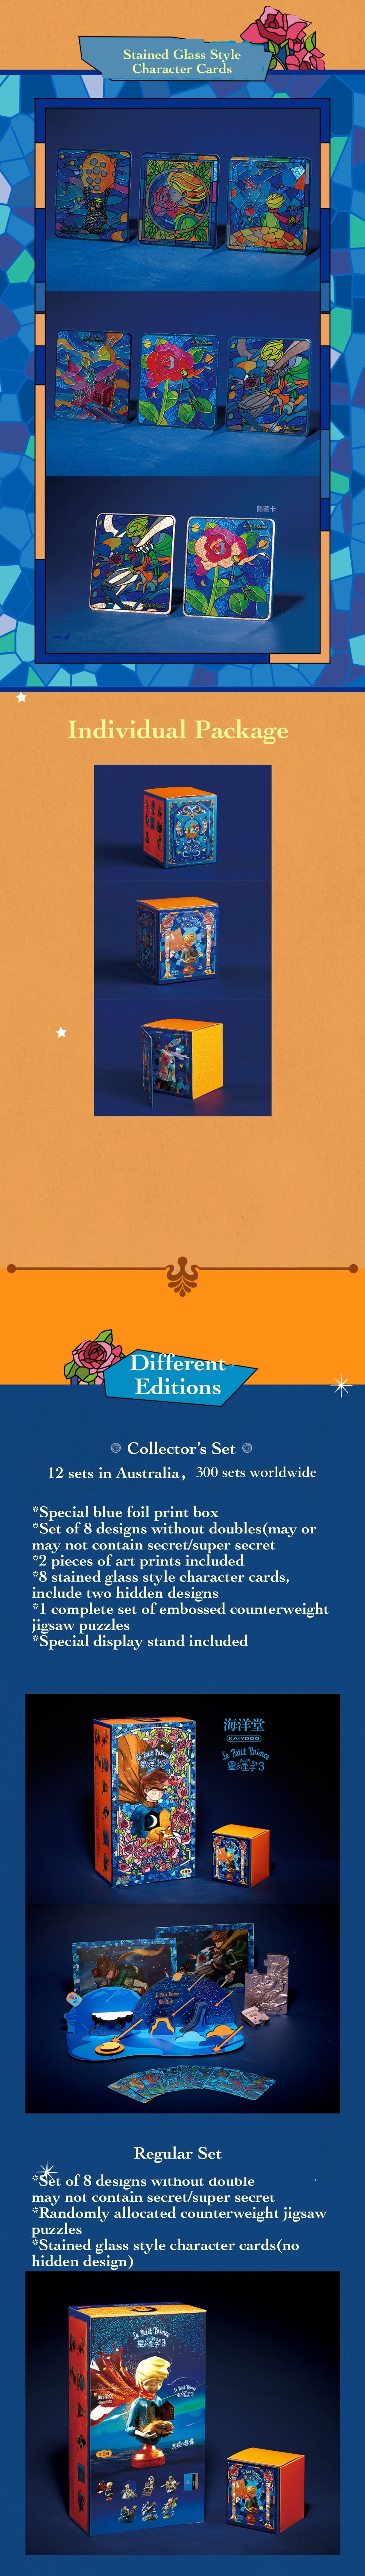 The Little Prince "Eternal Imagination" Vol.3 Series Blind Box Art Toys PD2